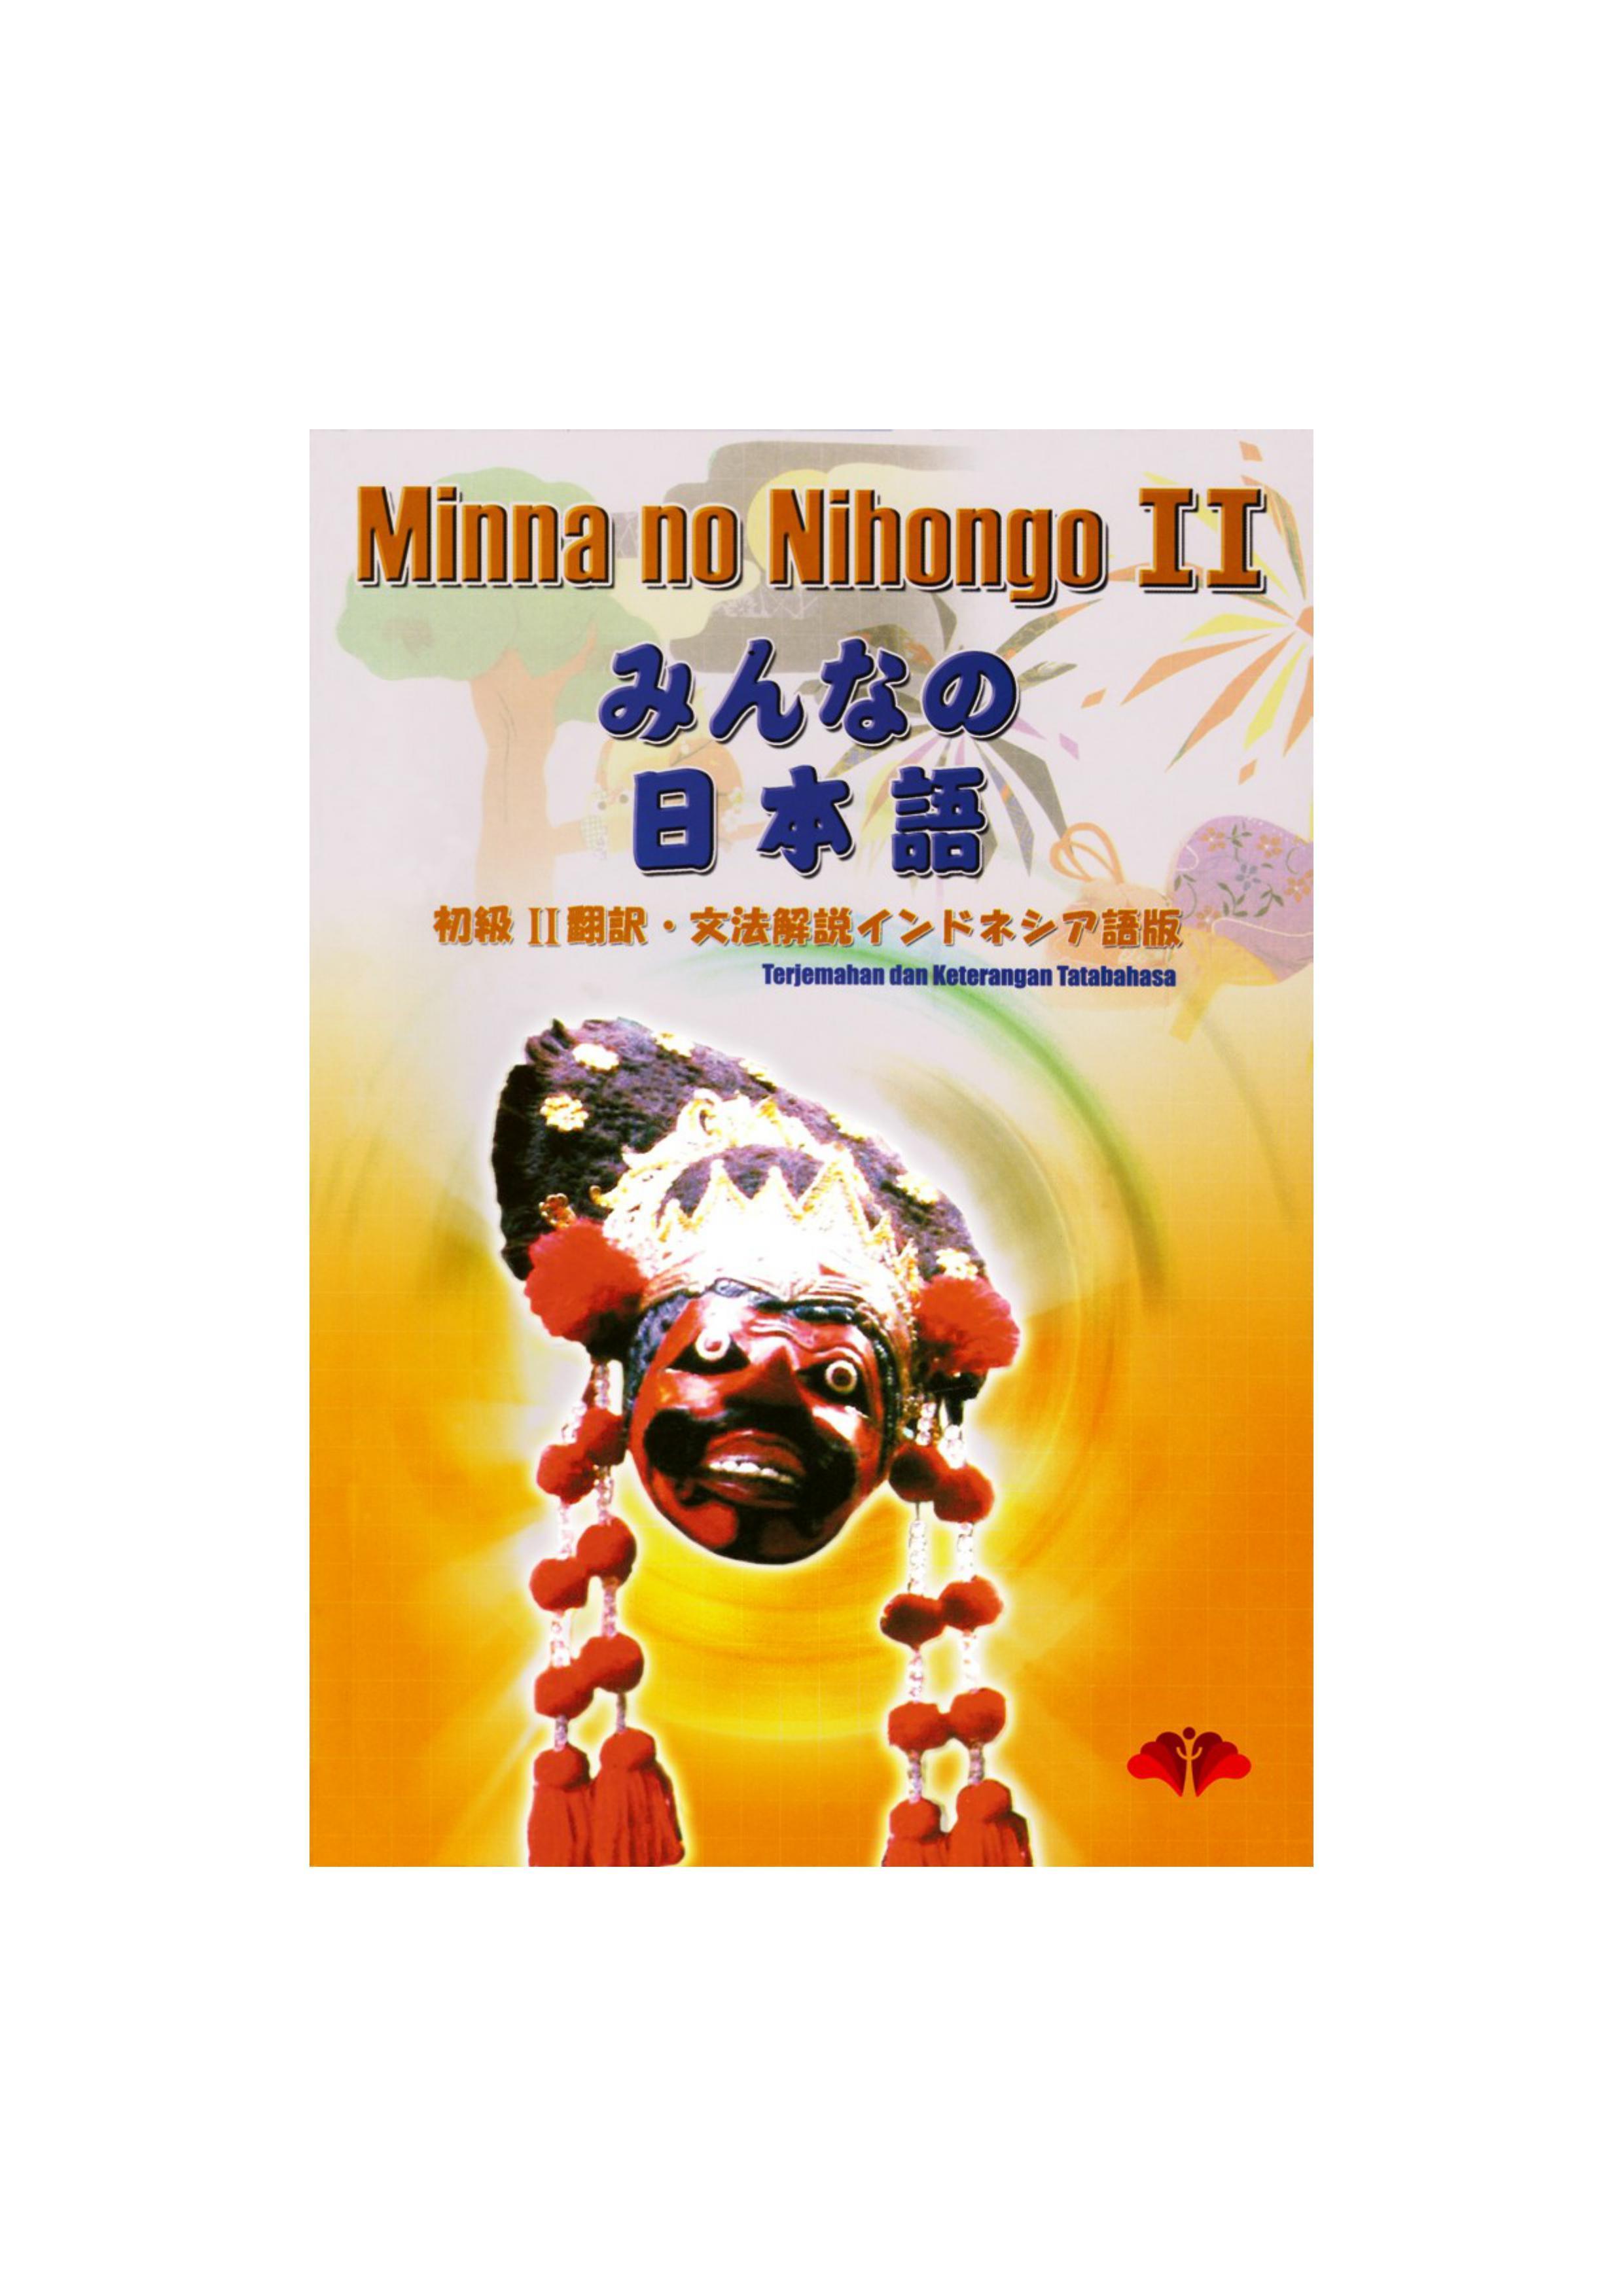 ebook minna no nihongo bahasa indonesia